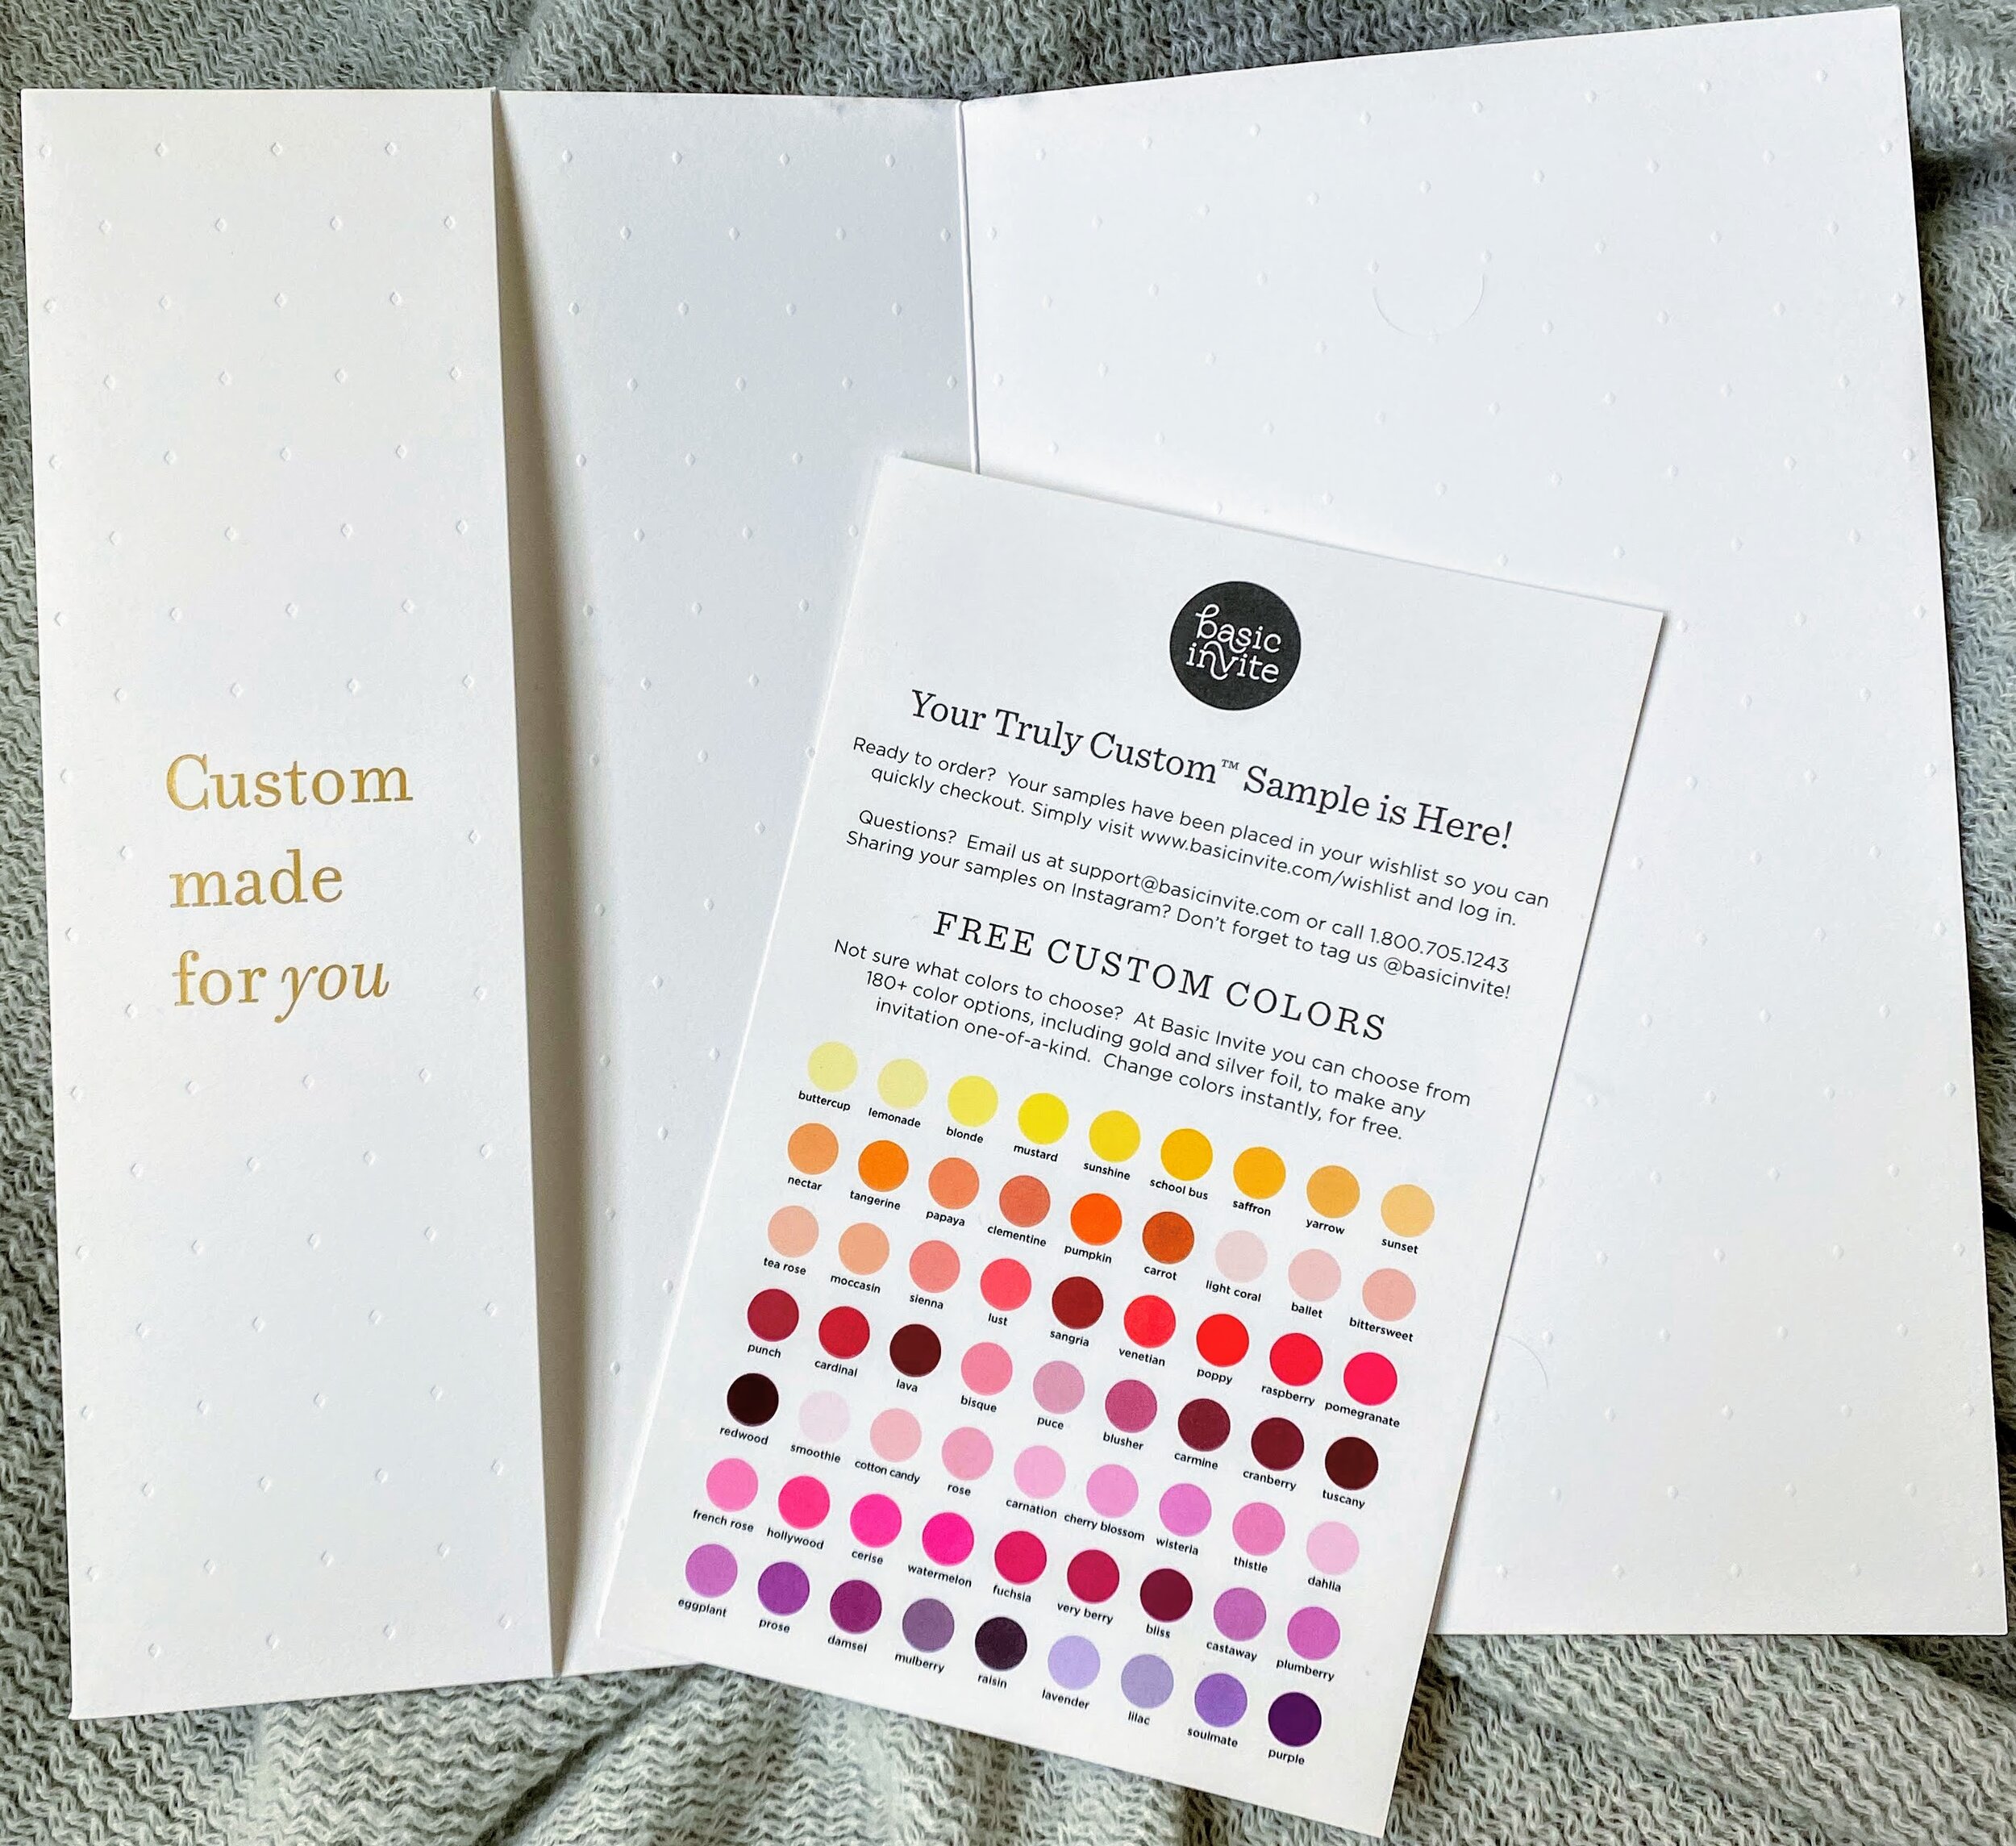 Custom colors from Basic Invite stationary